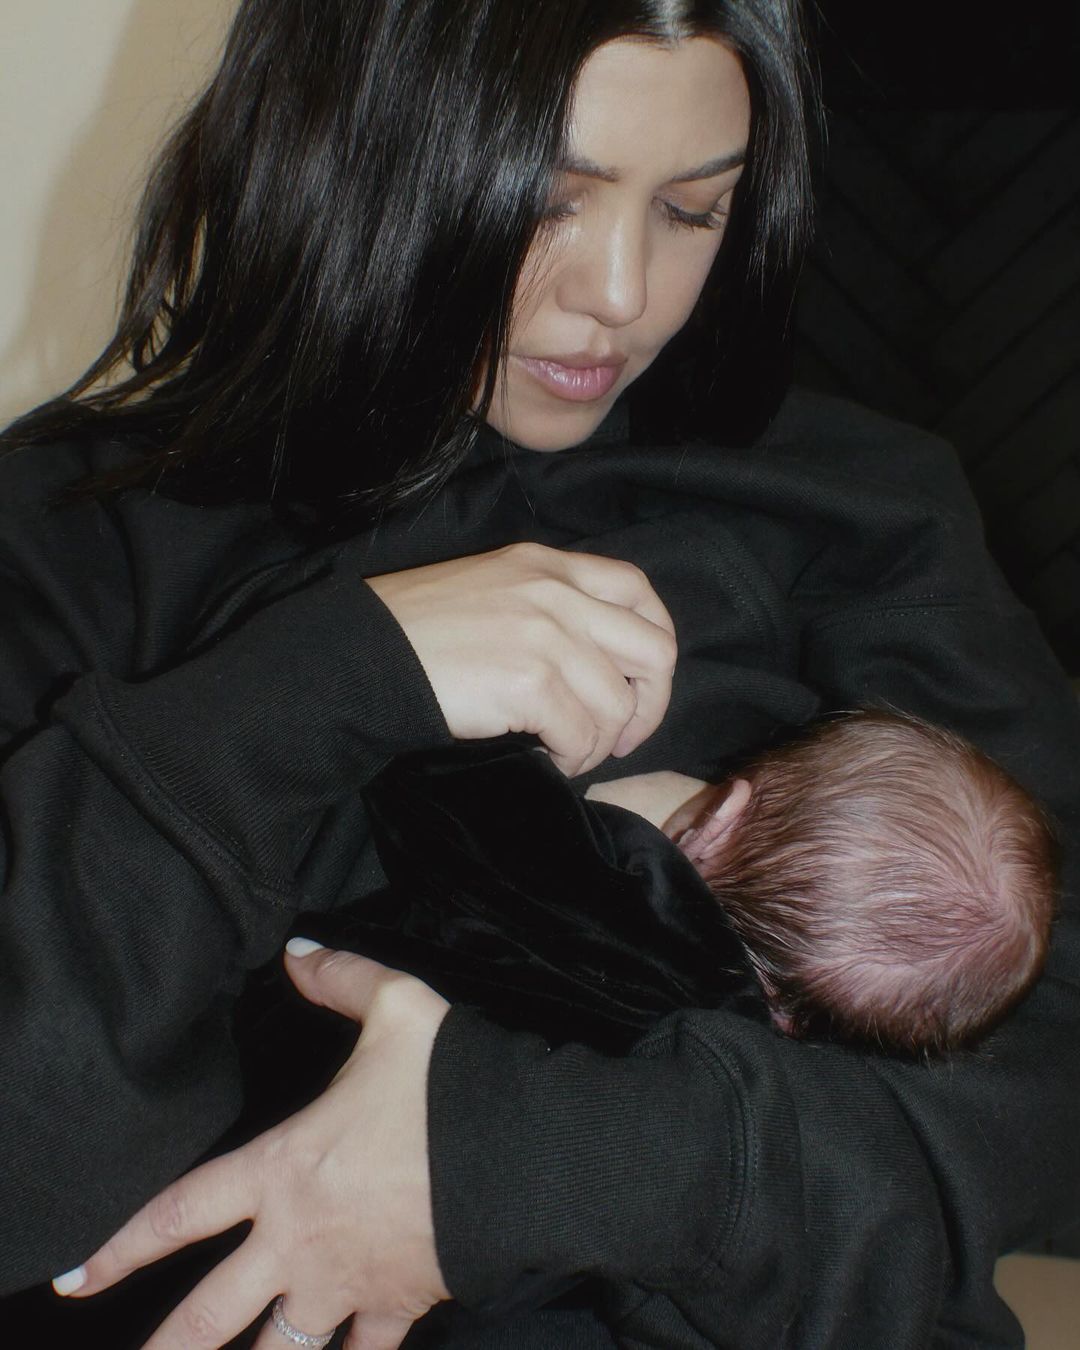 Kourtney pictured with her newborn baby Rocky